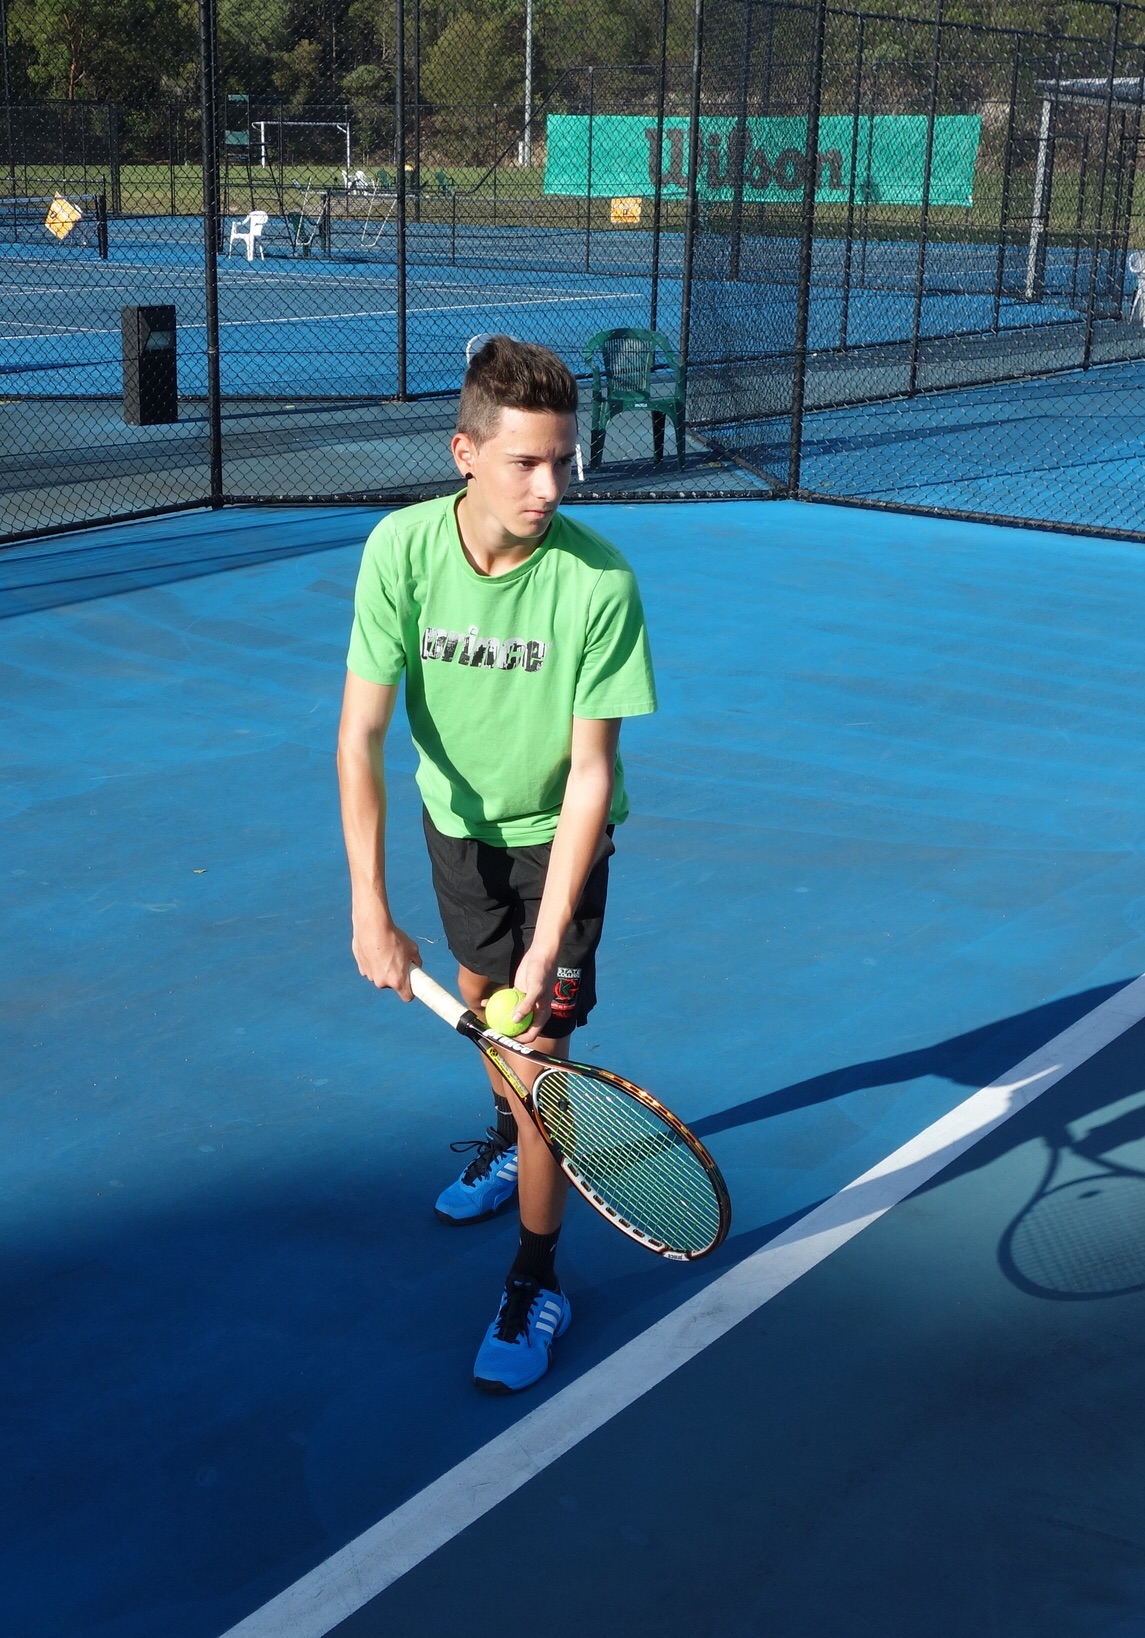 Debüt von Tom El Safadi beim ITF Junior in Nürnberg